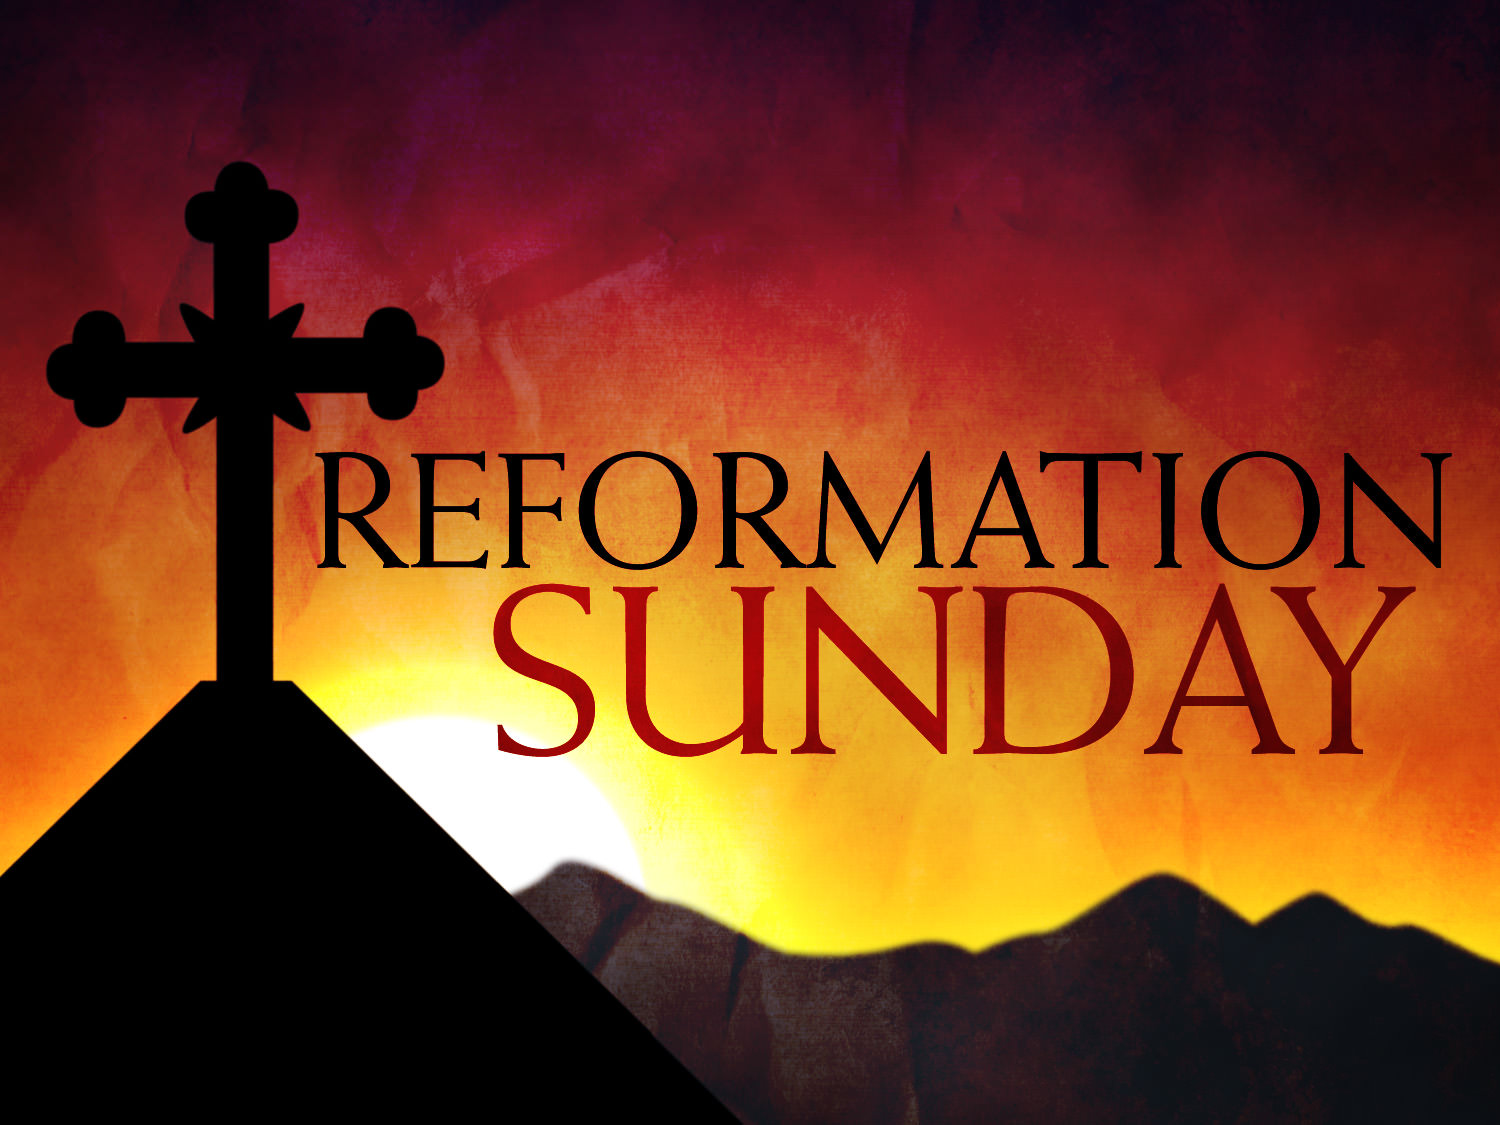 REFORMATION SUNDAY 65TH ANNIVERSARY! Reformation Lutheran Church